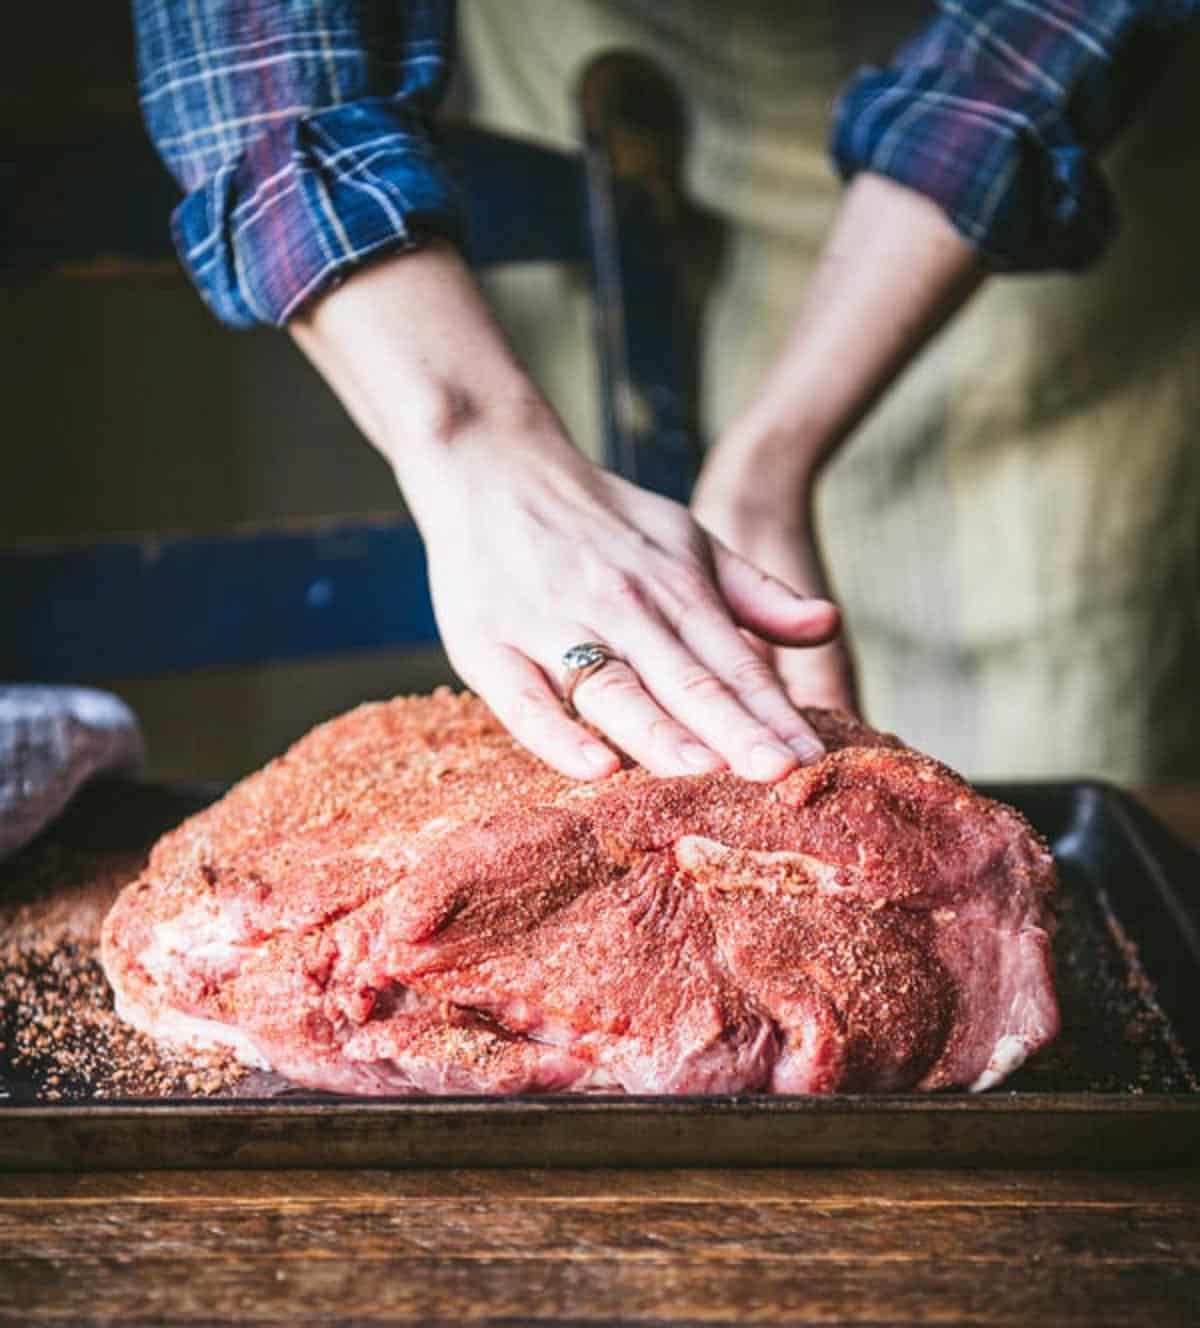 Seasoning pork shoulder with a bbq dry rub.